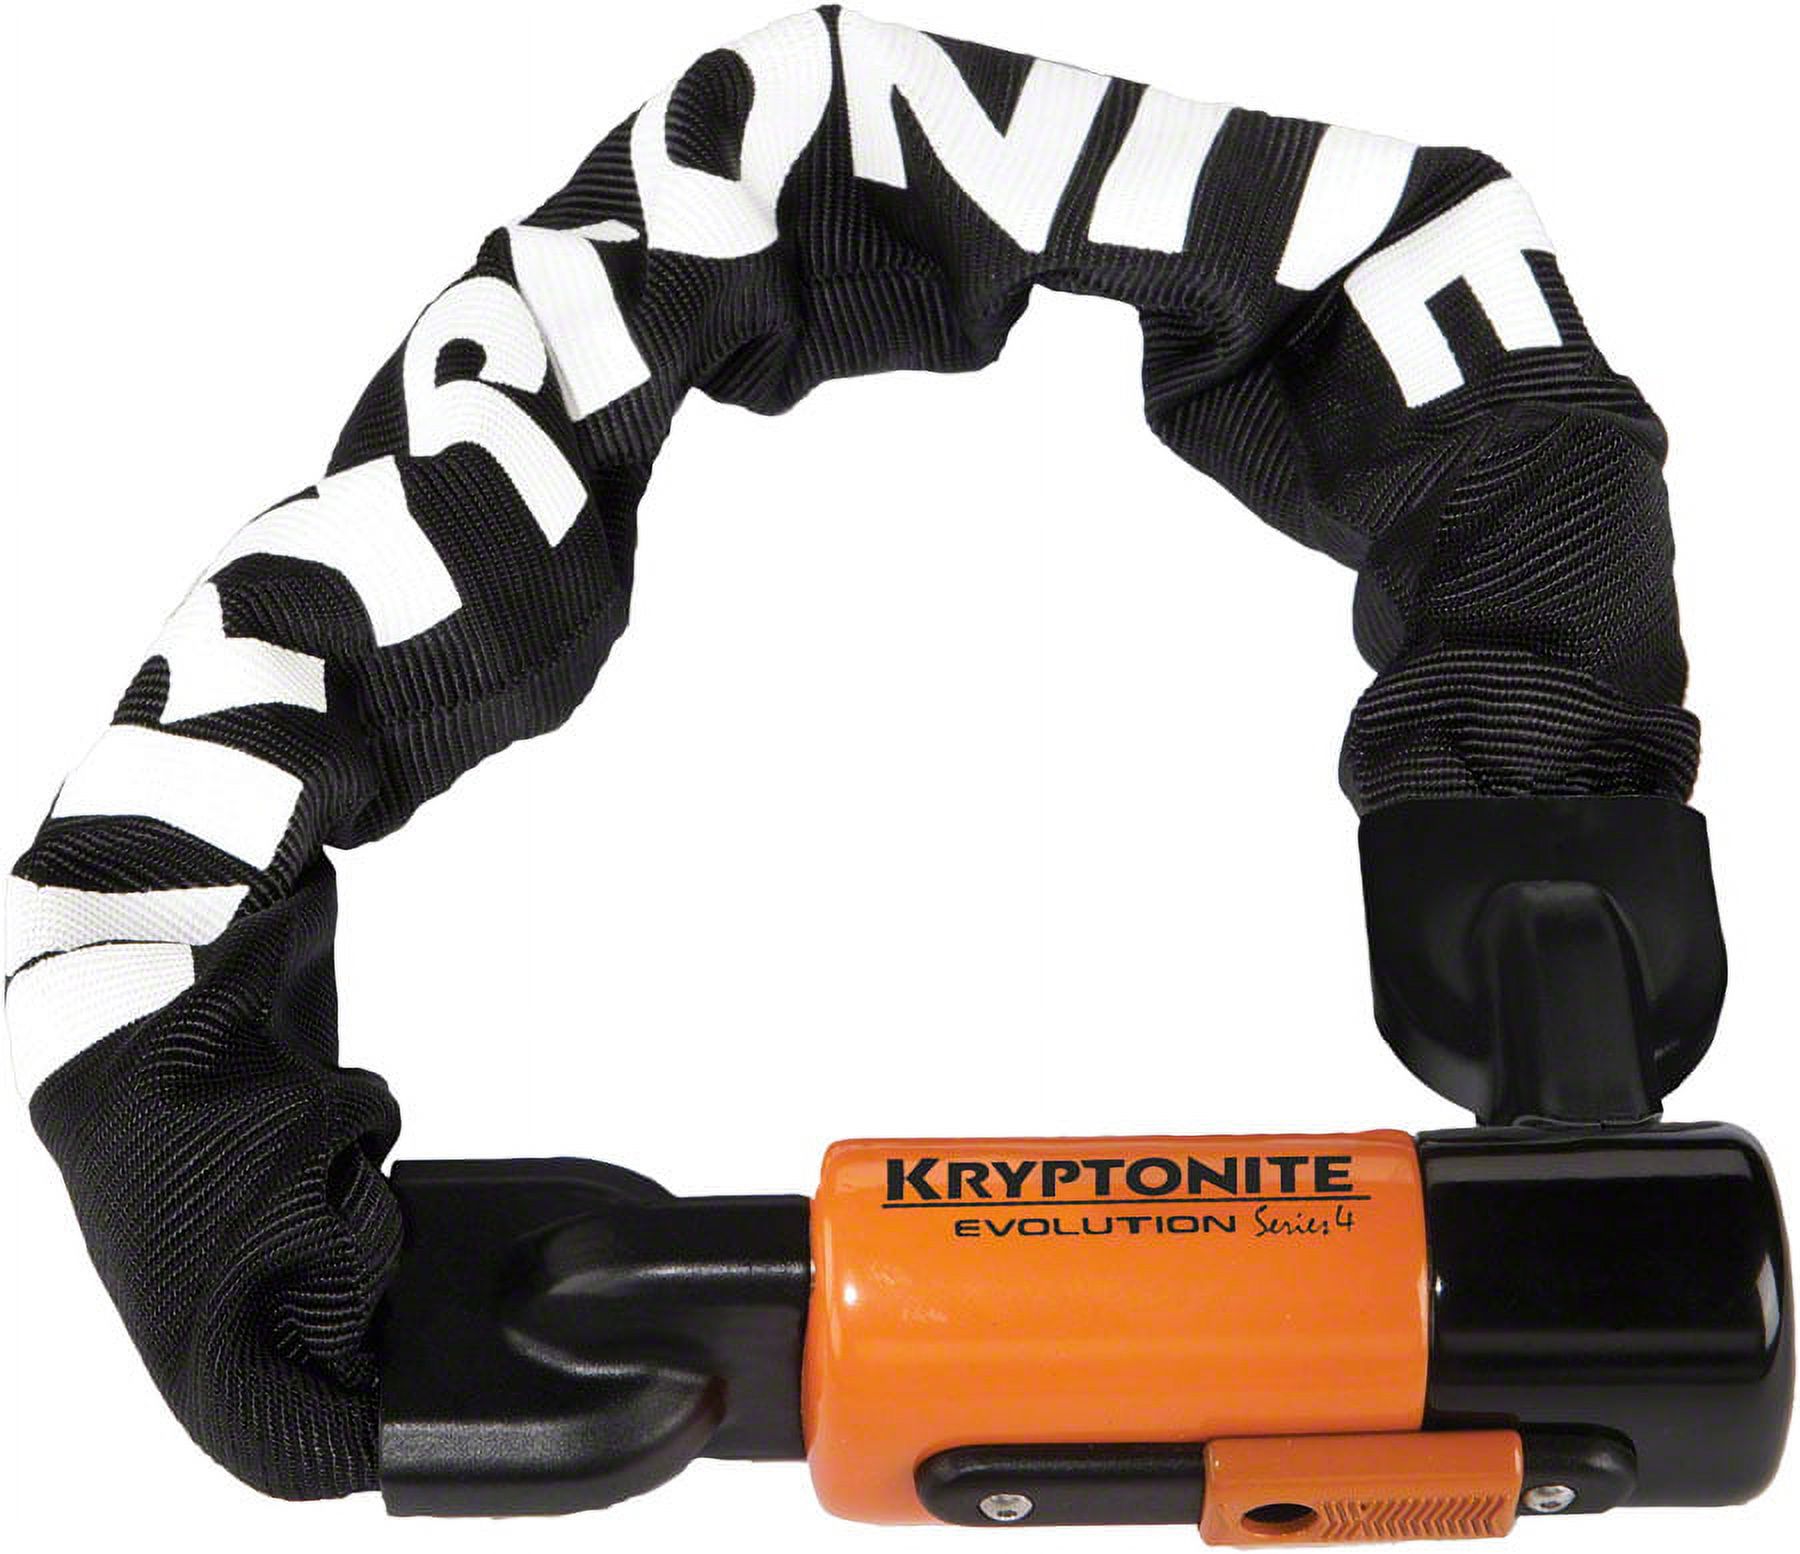 Kryptonite 1055 Evolution Mini Series 4 Chain Lock Keyed 10mm x 55cm End Link - image 1 of 2